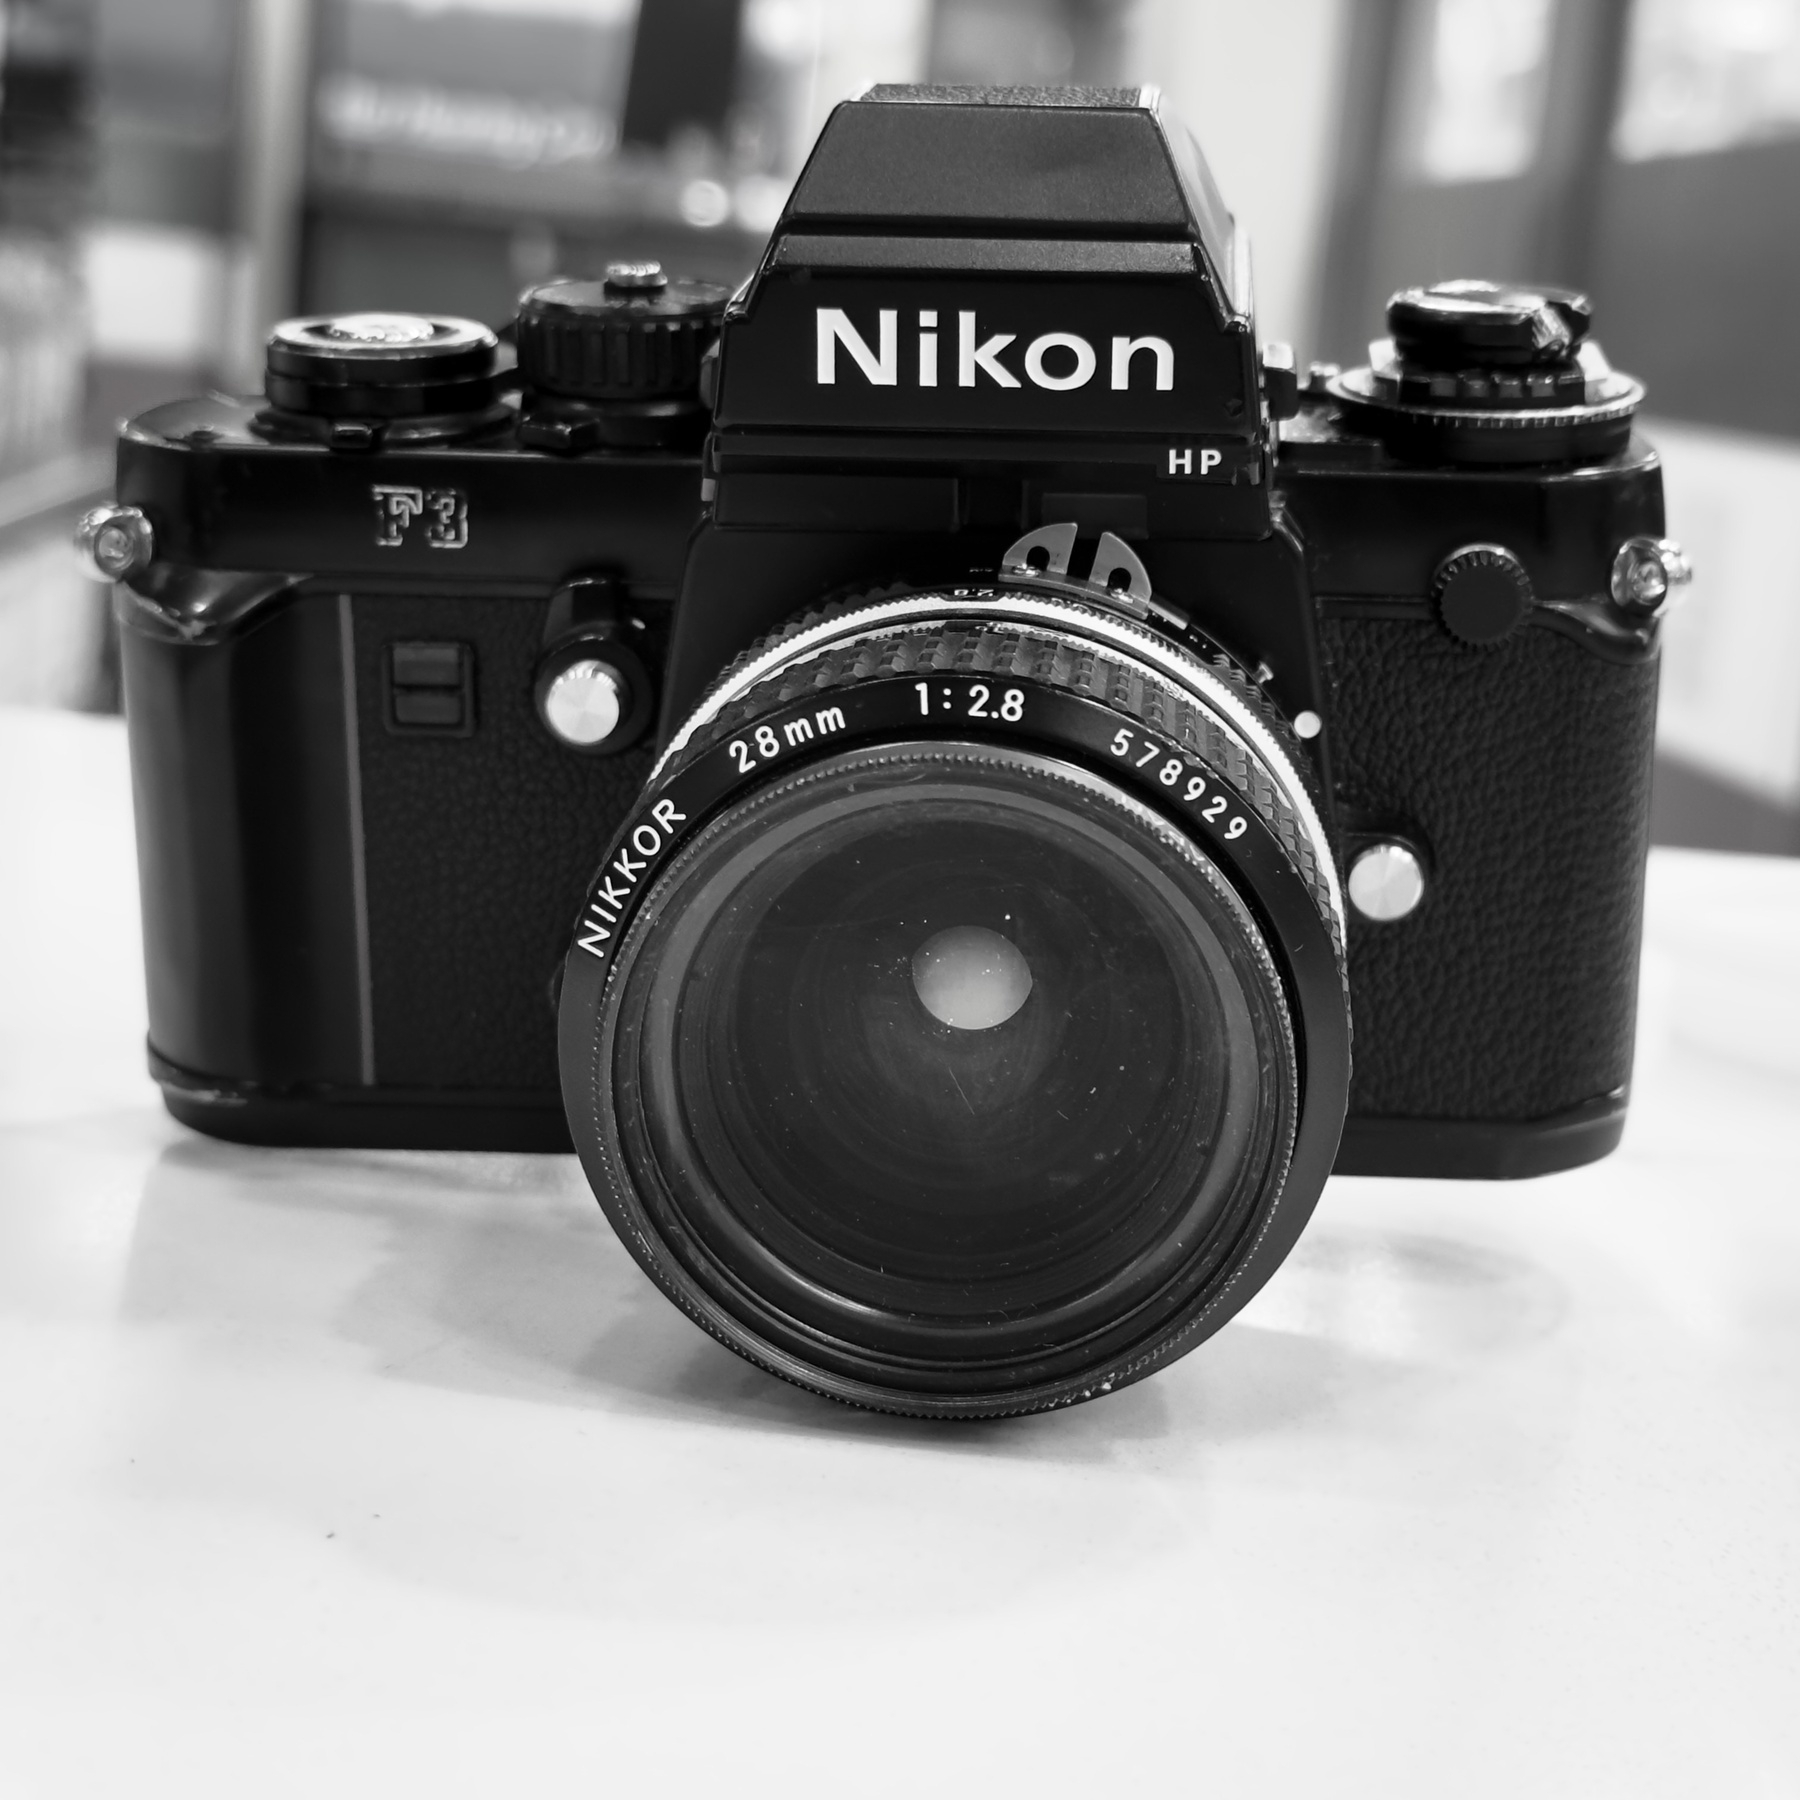 A black and white photo of a Nikon F3HP SLR camera